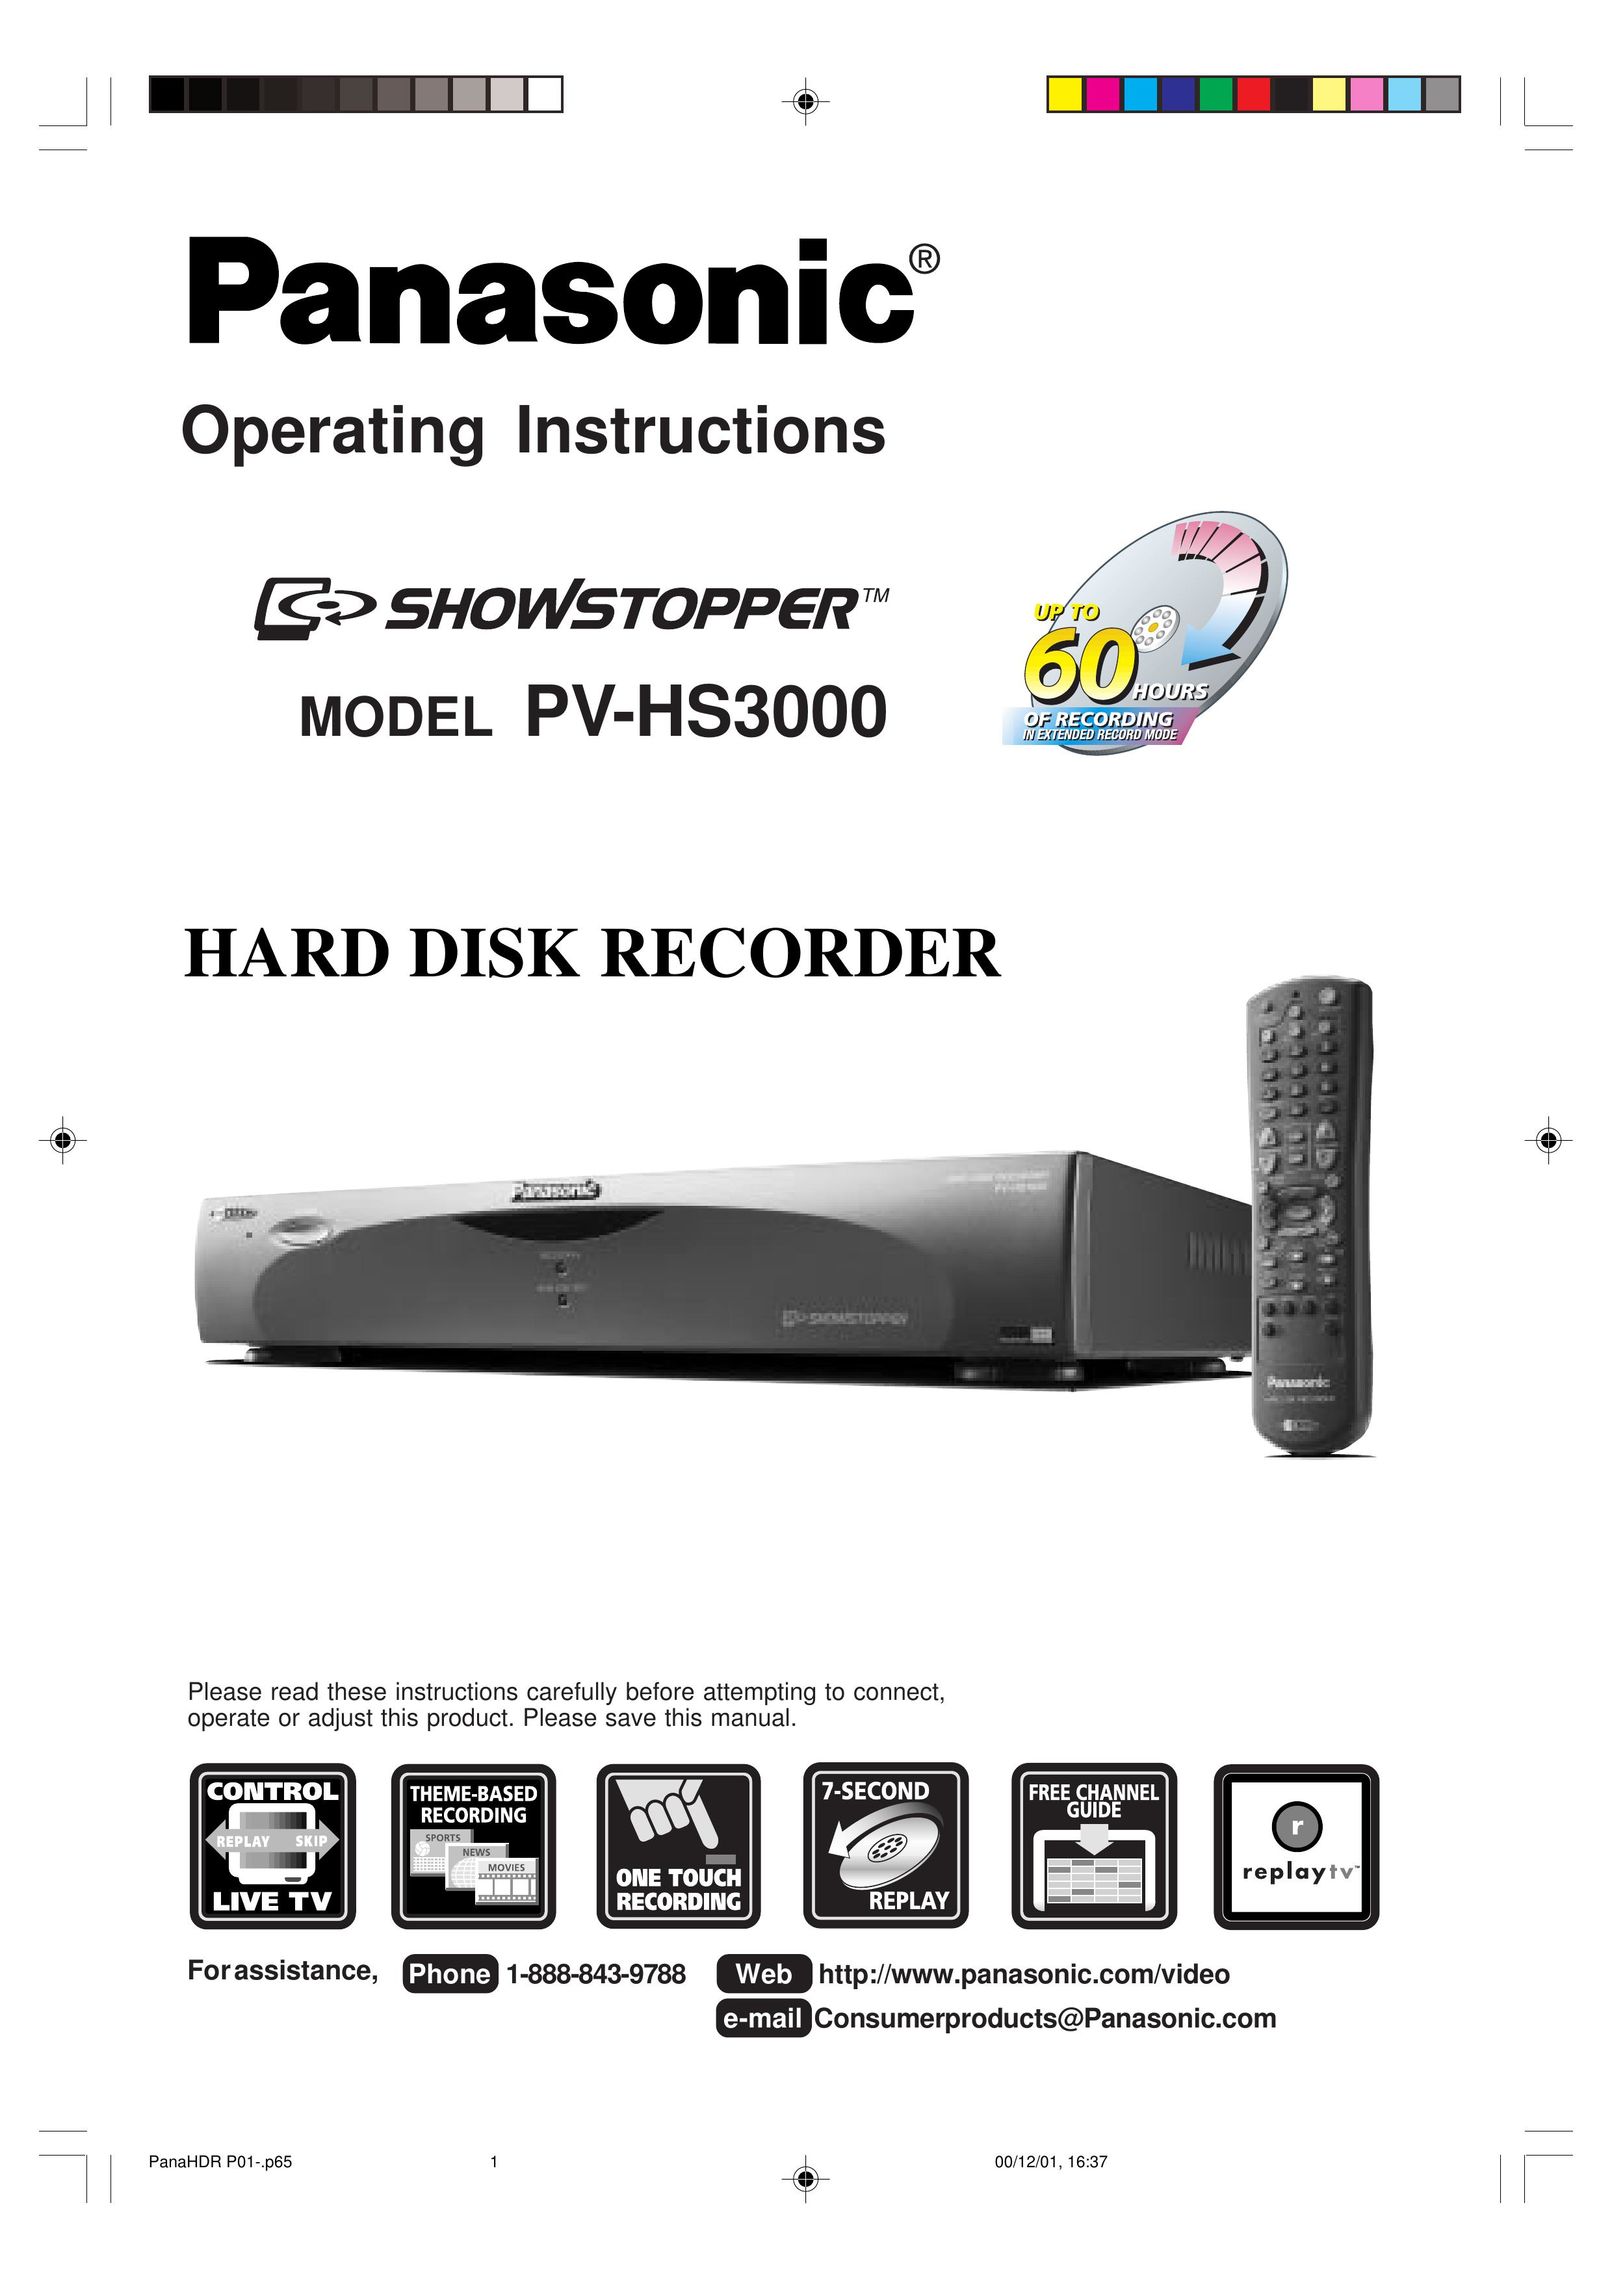 Panasonic PV-HS3000 DVR User Manual